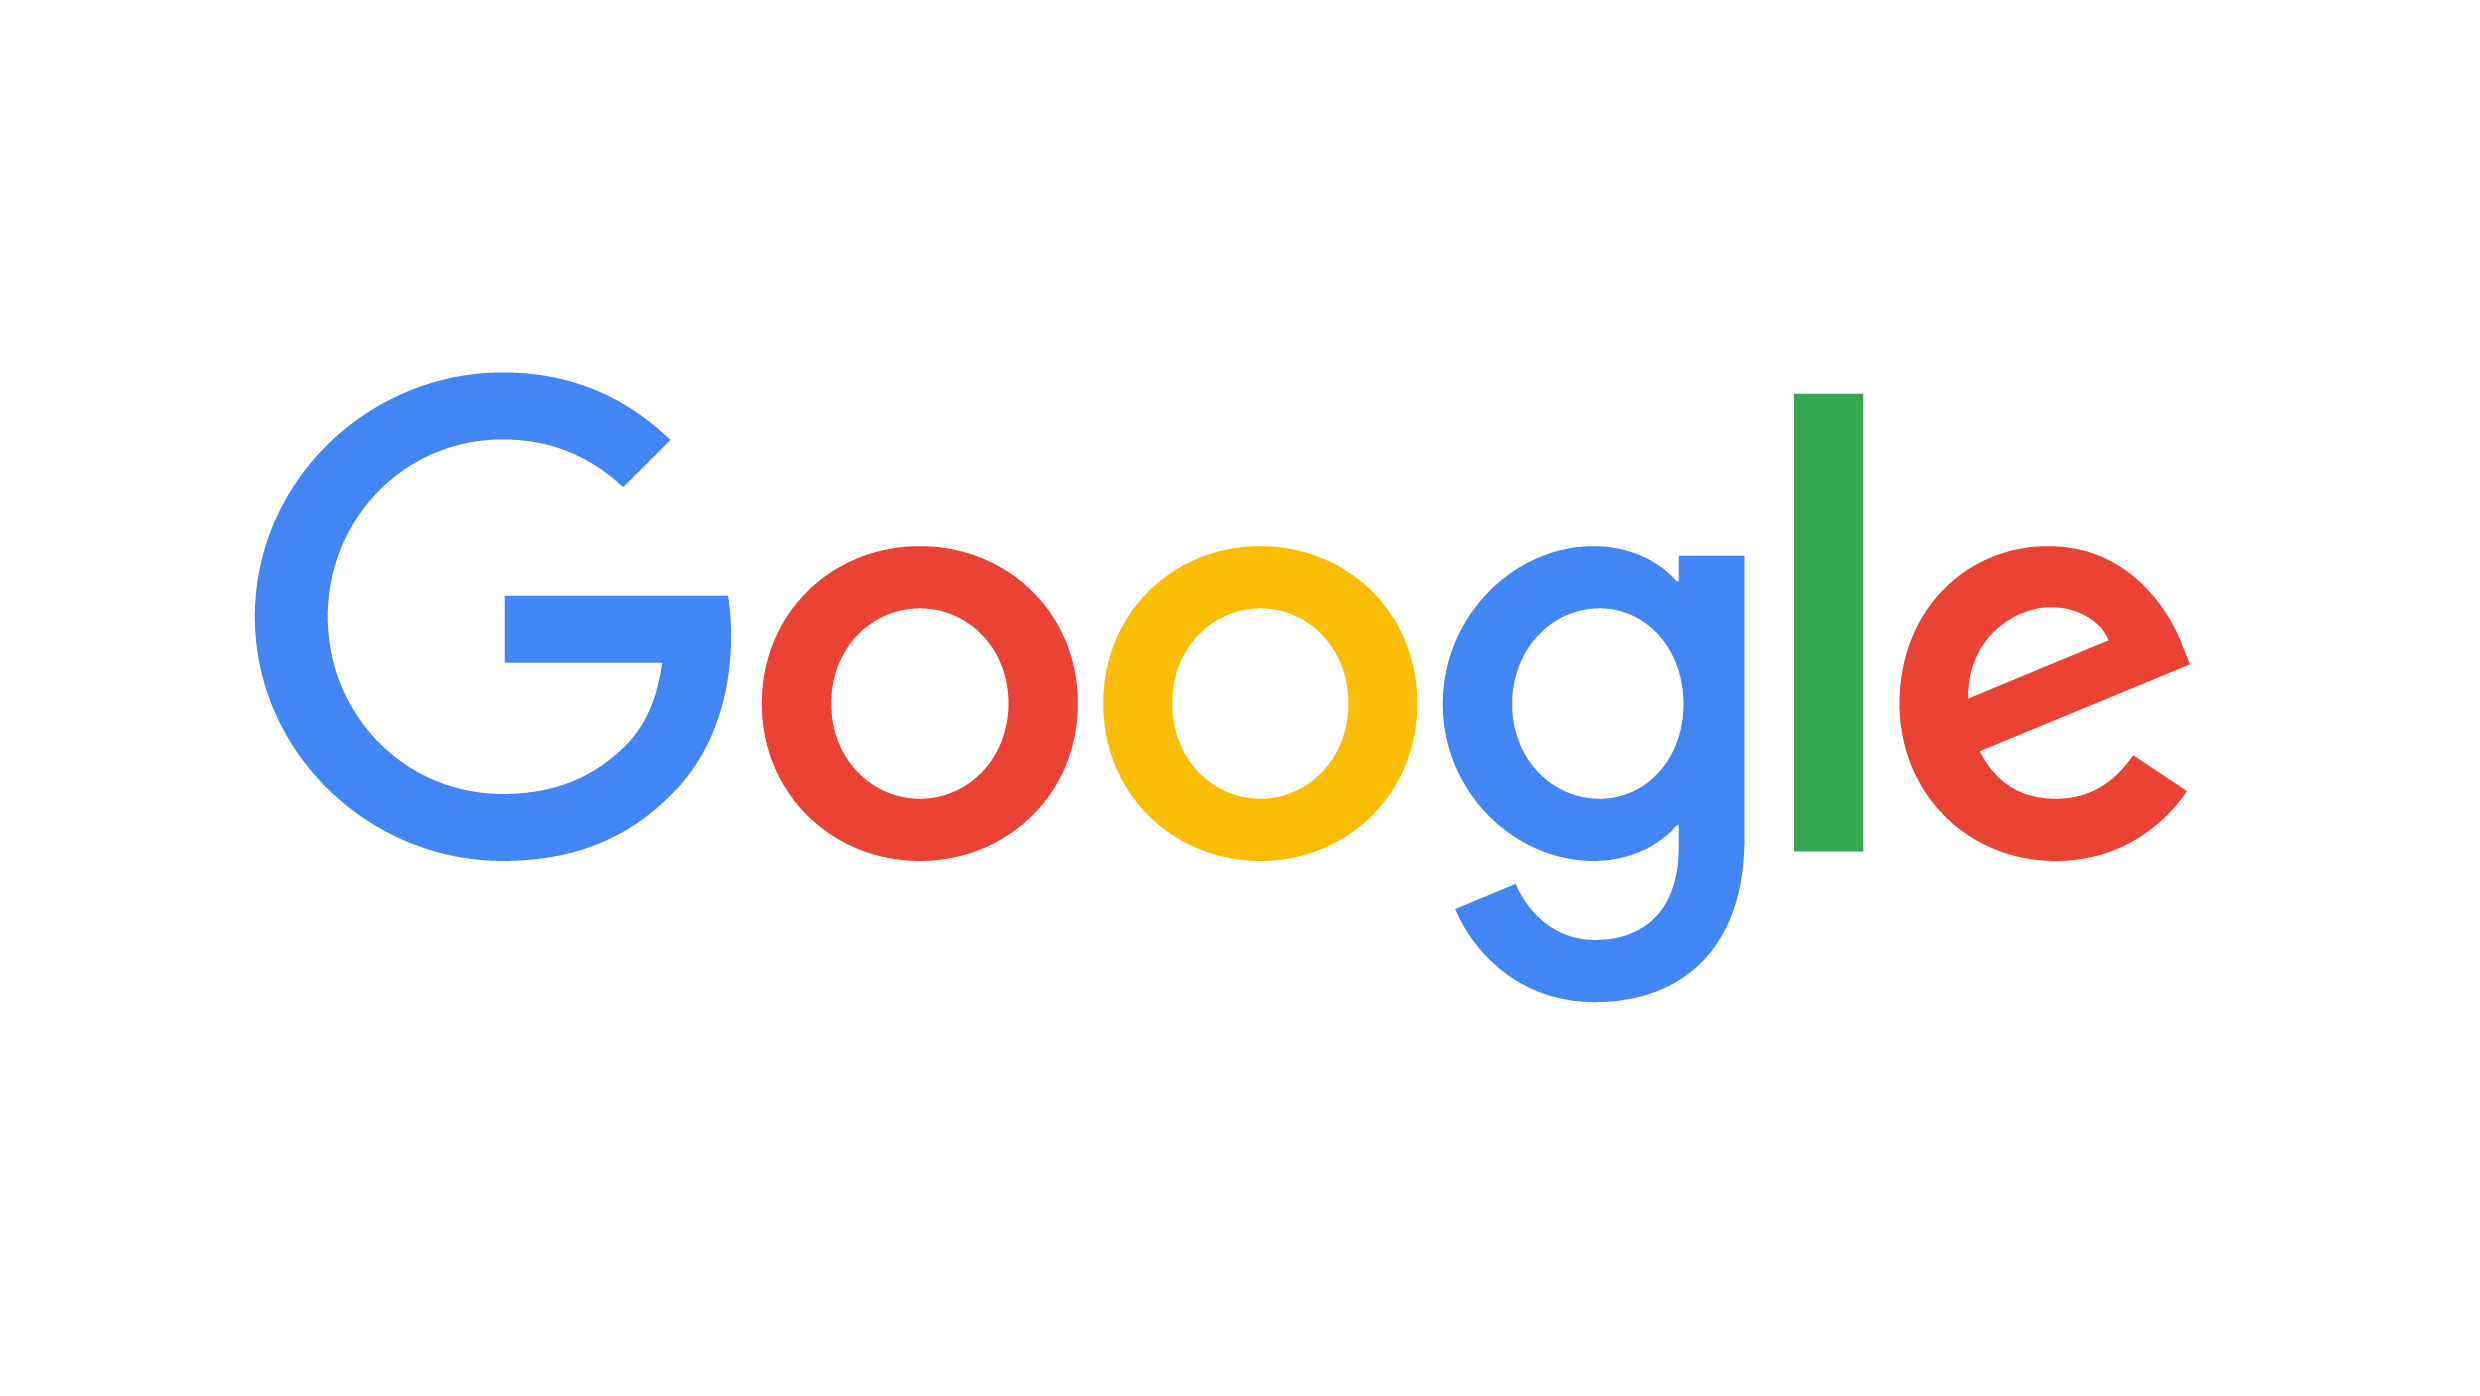 Google 2017 Logo - Google Logo